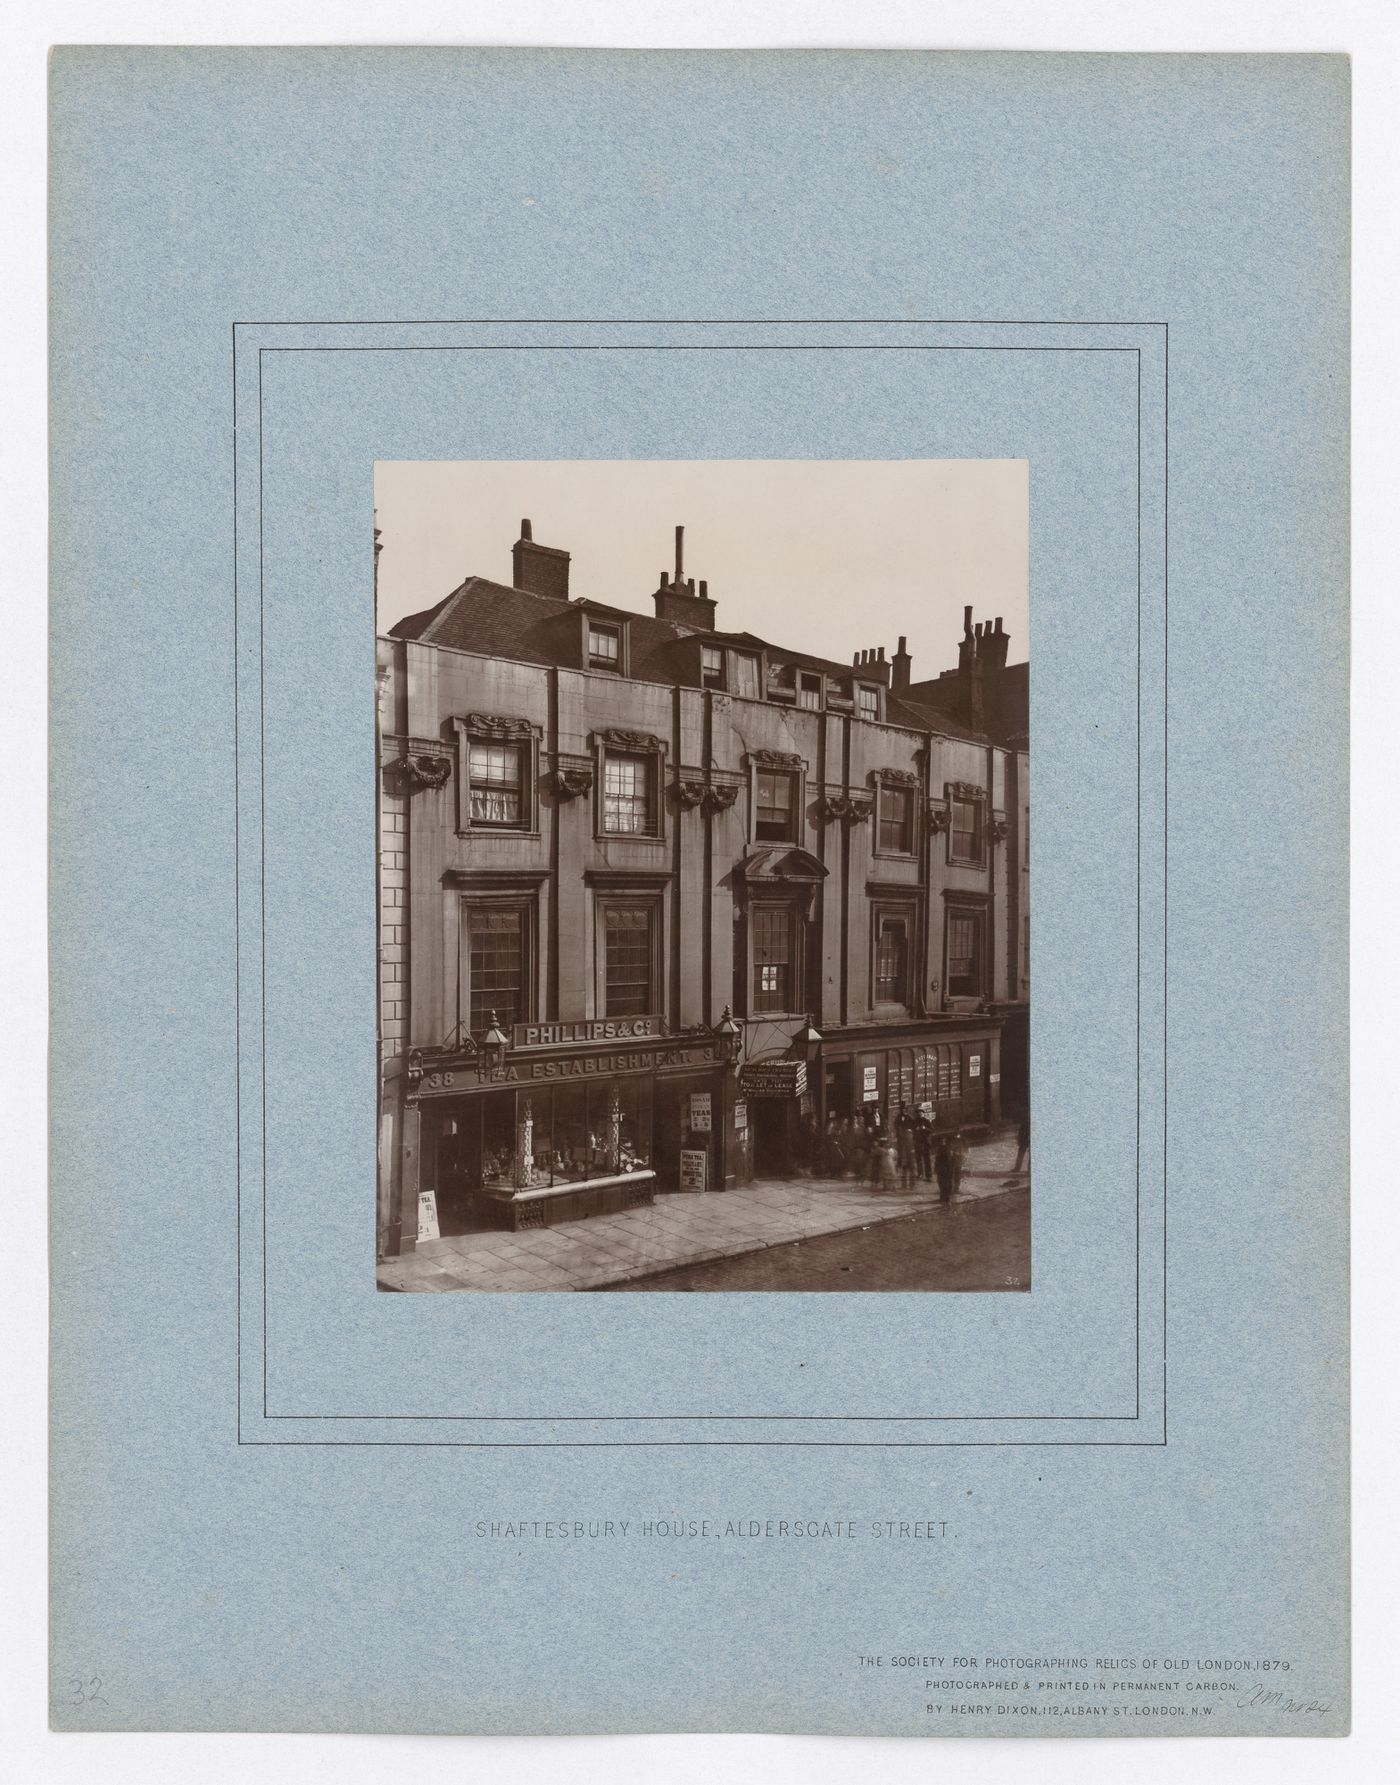 Shaftesbury House Aldersgate Street